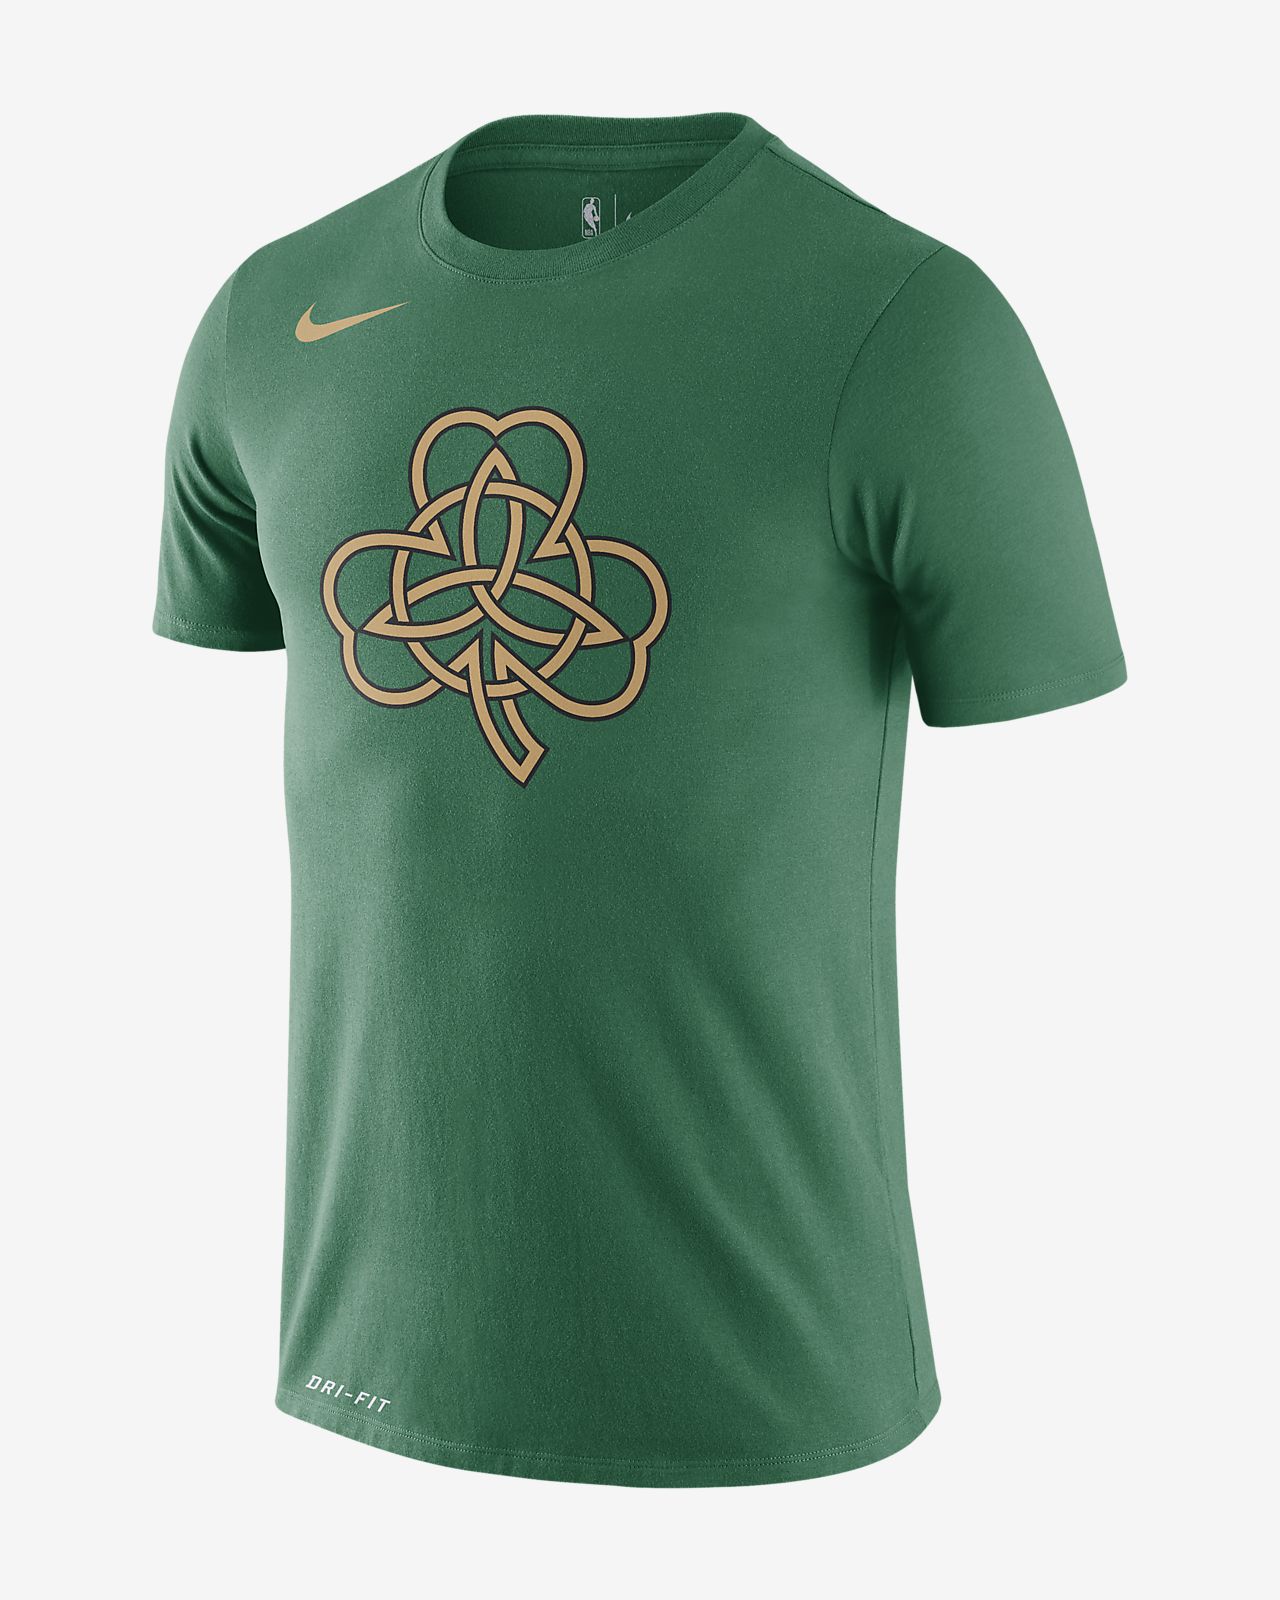 Nike Regular Fit T Shirt Size Chart